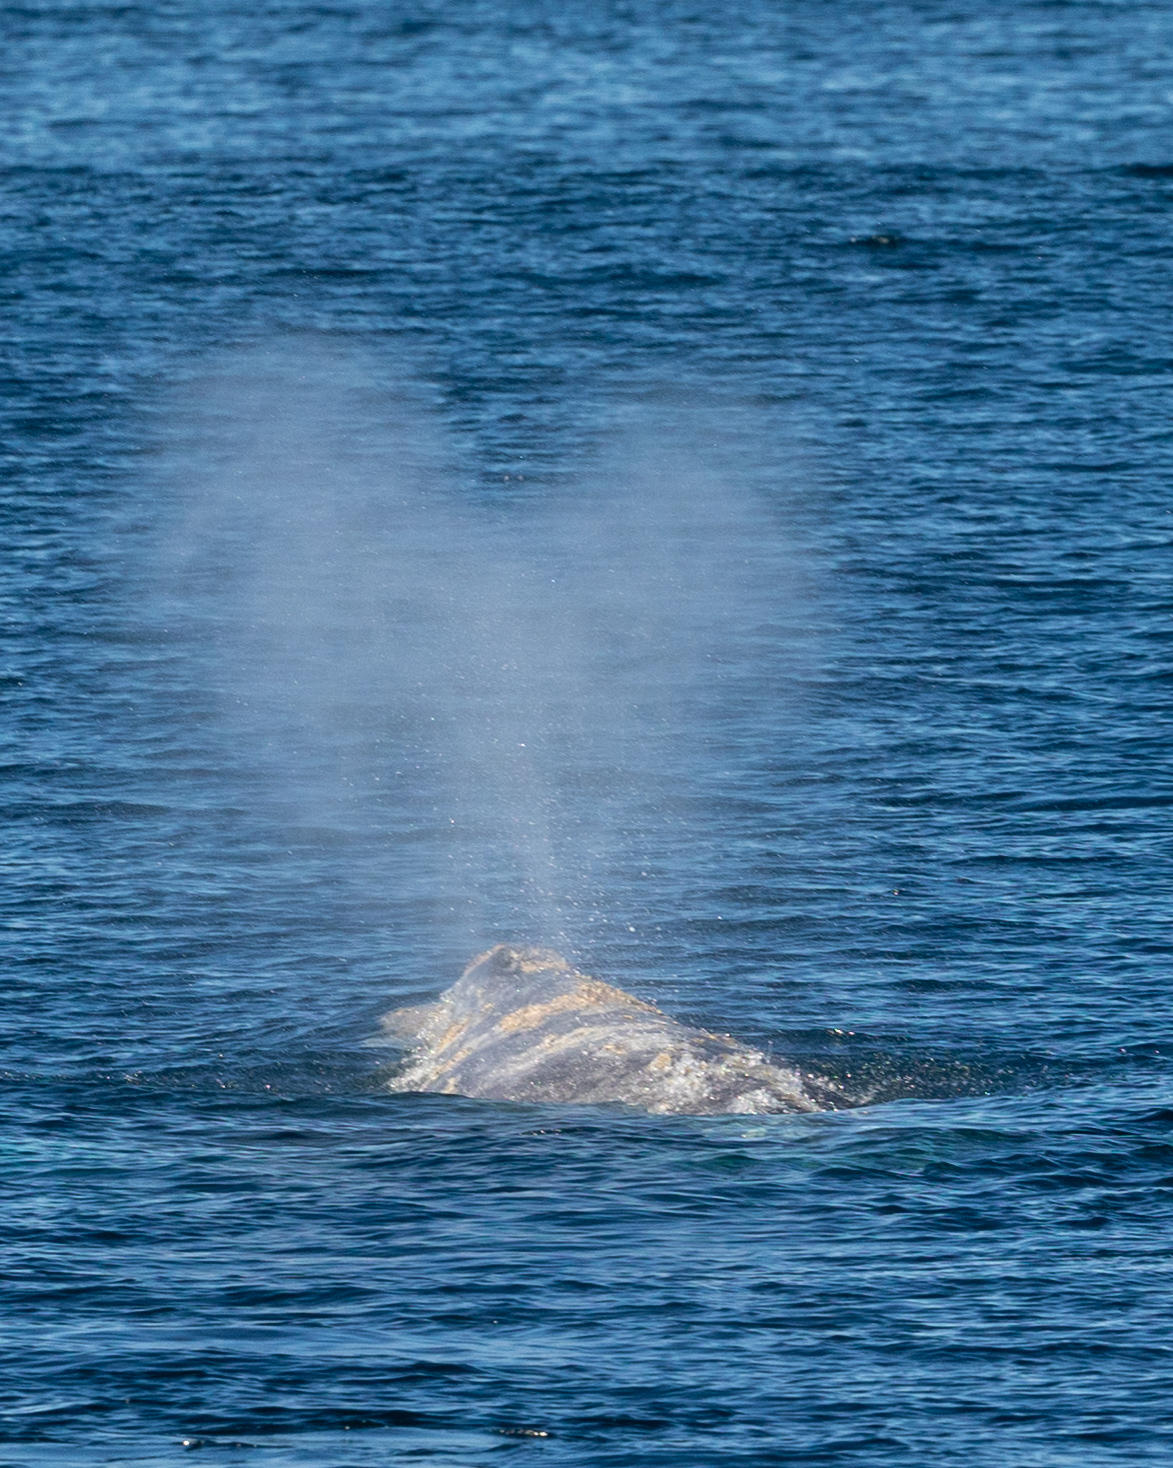 217A4112 1 | San Diego Whale Watch 1